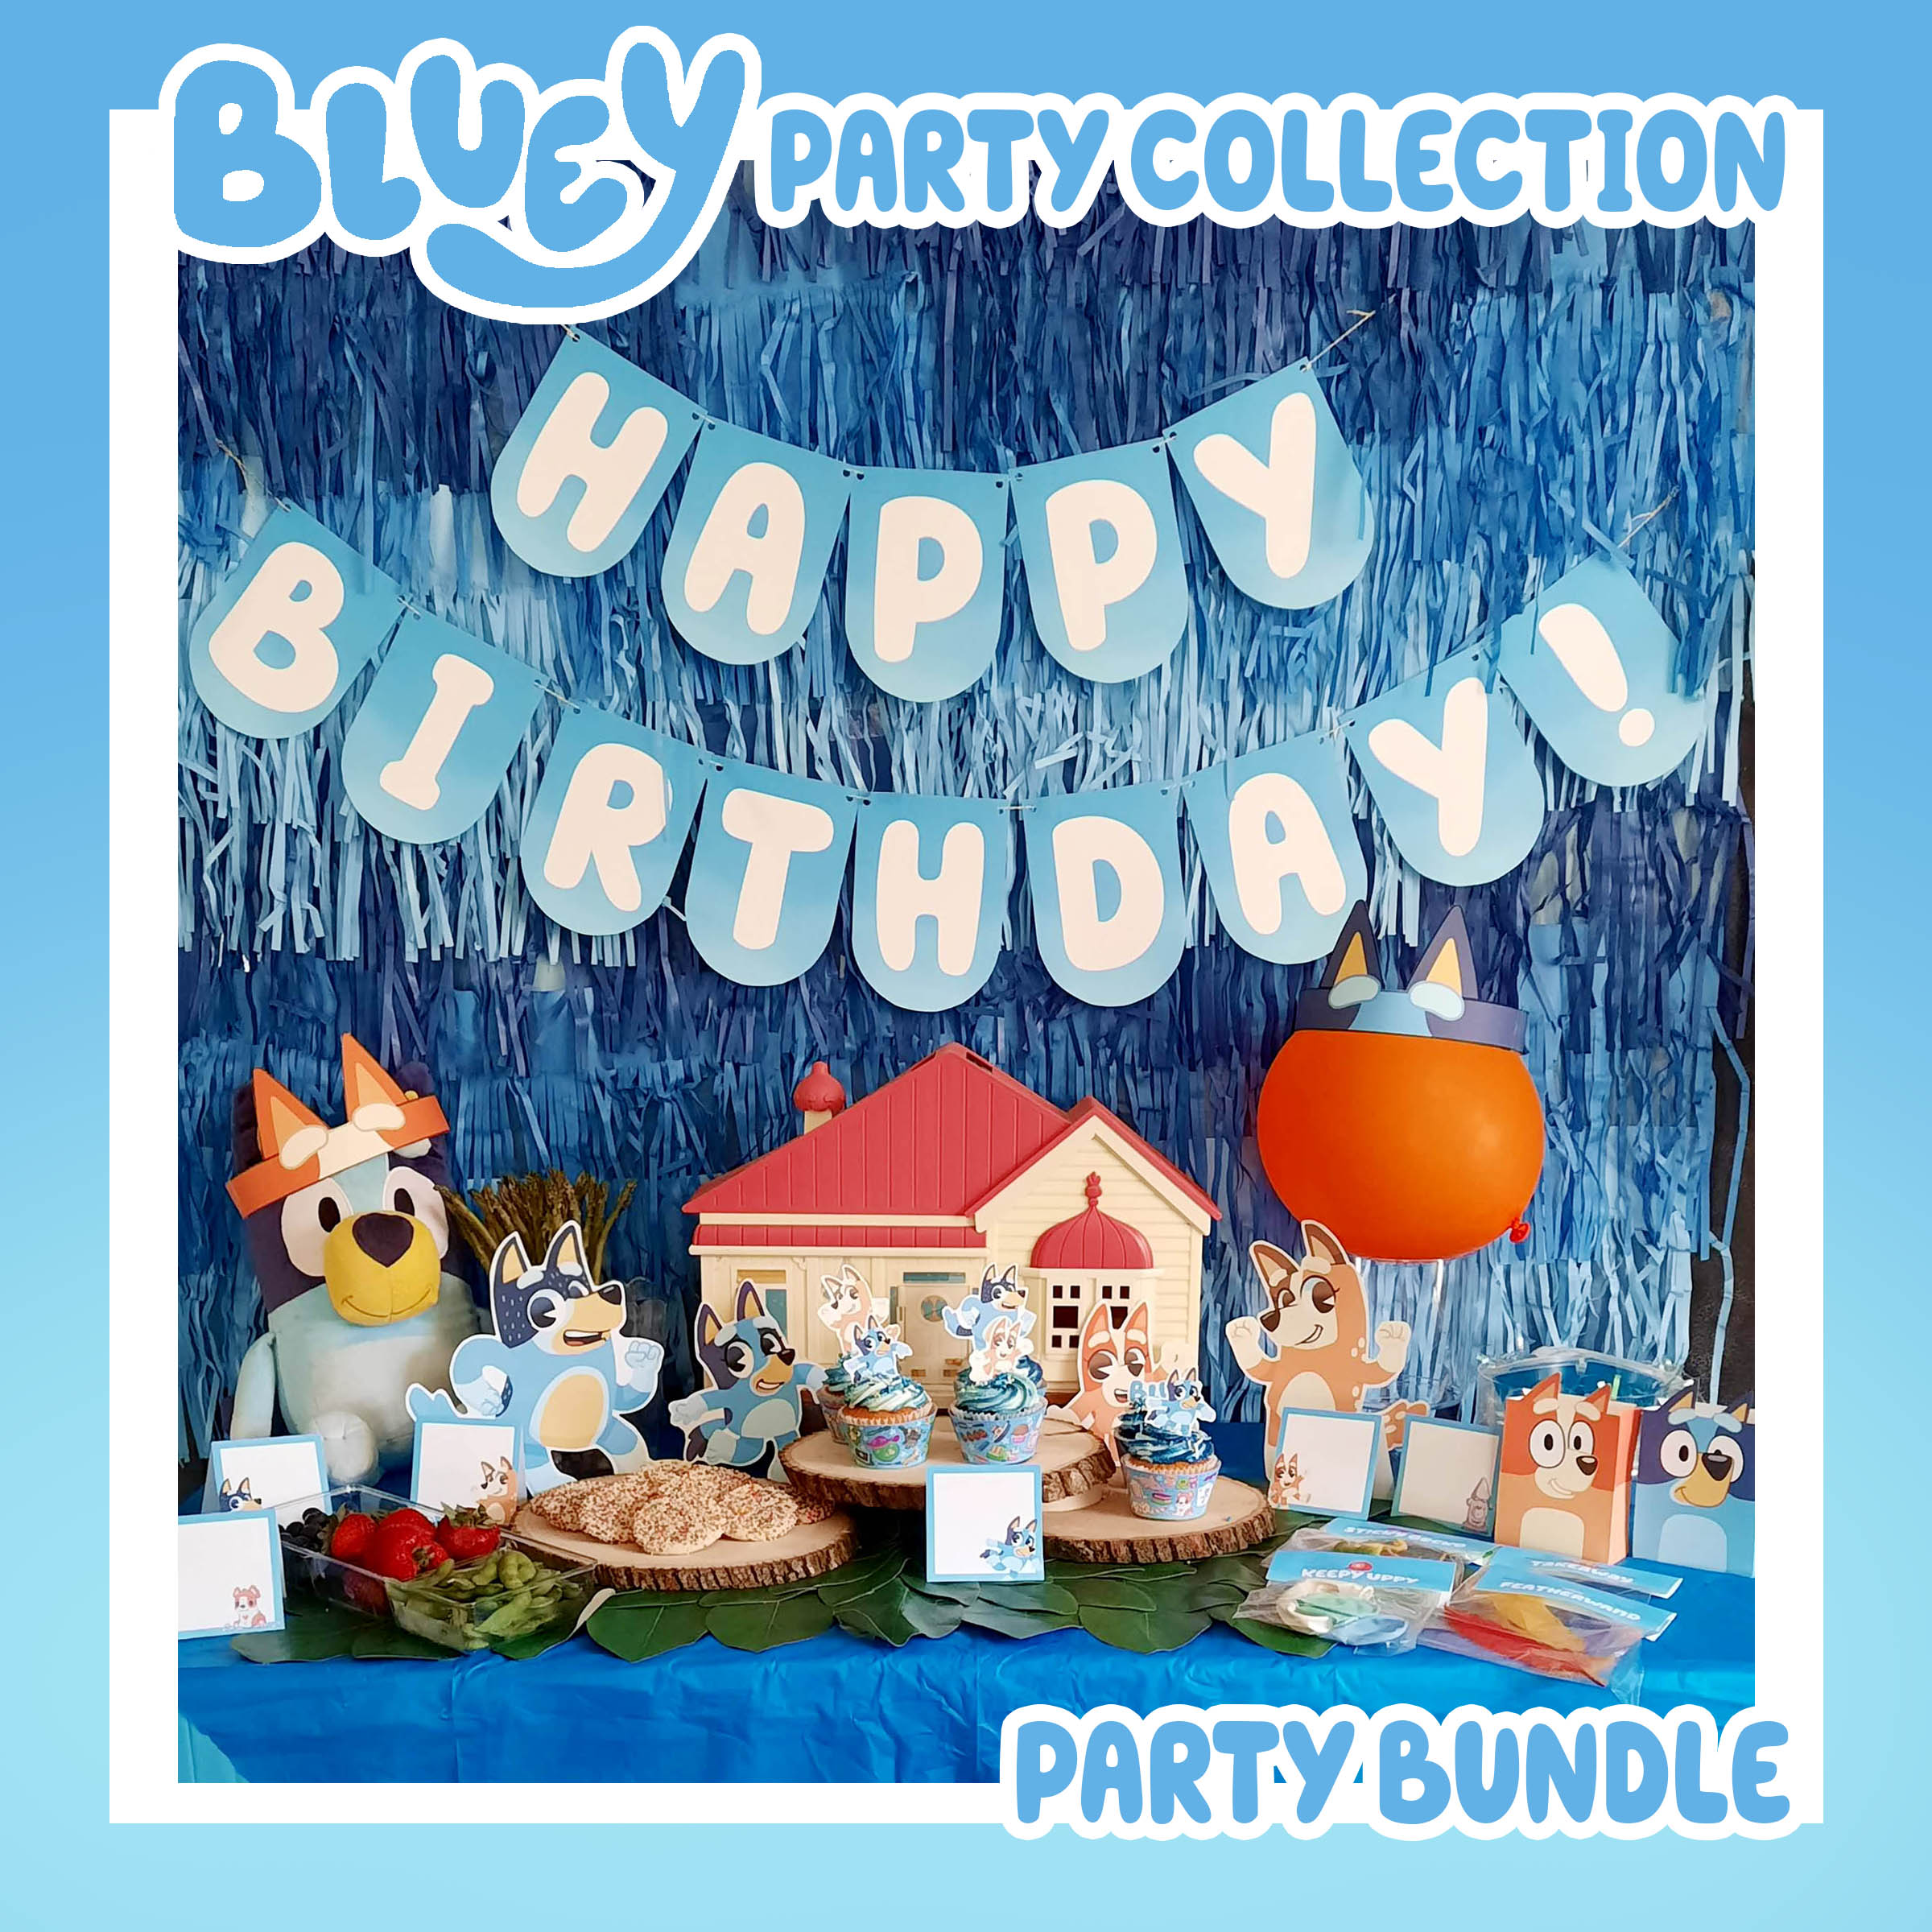 bluey birthday supplies,Bluey birthday party decorations, Bluey  banner,Bluey